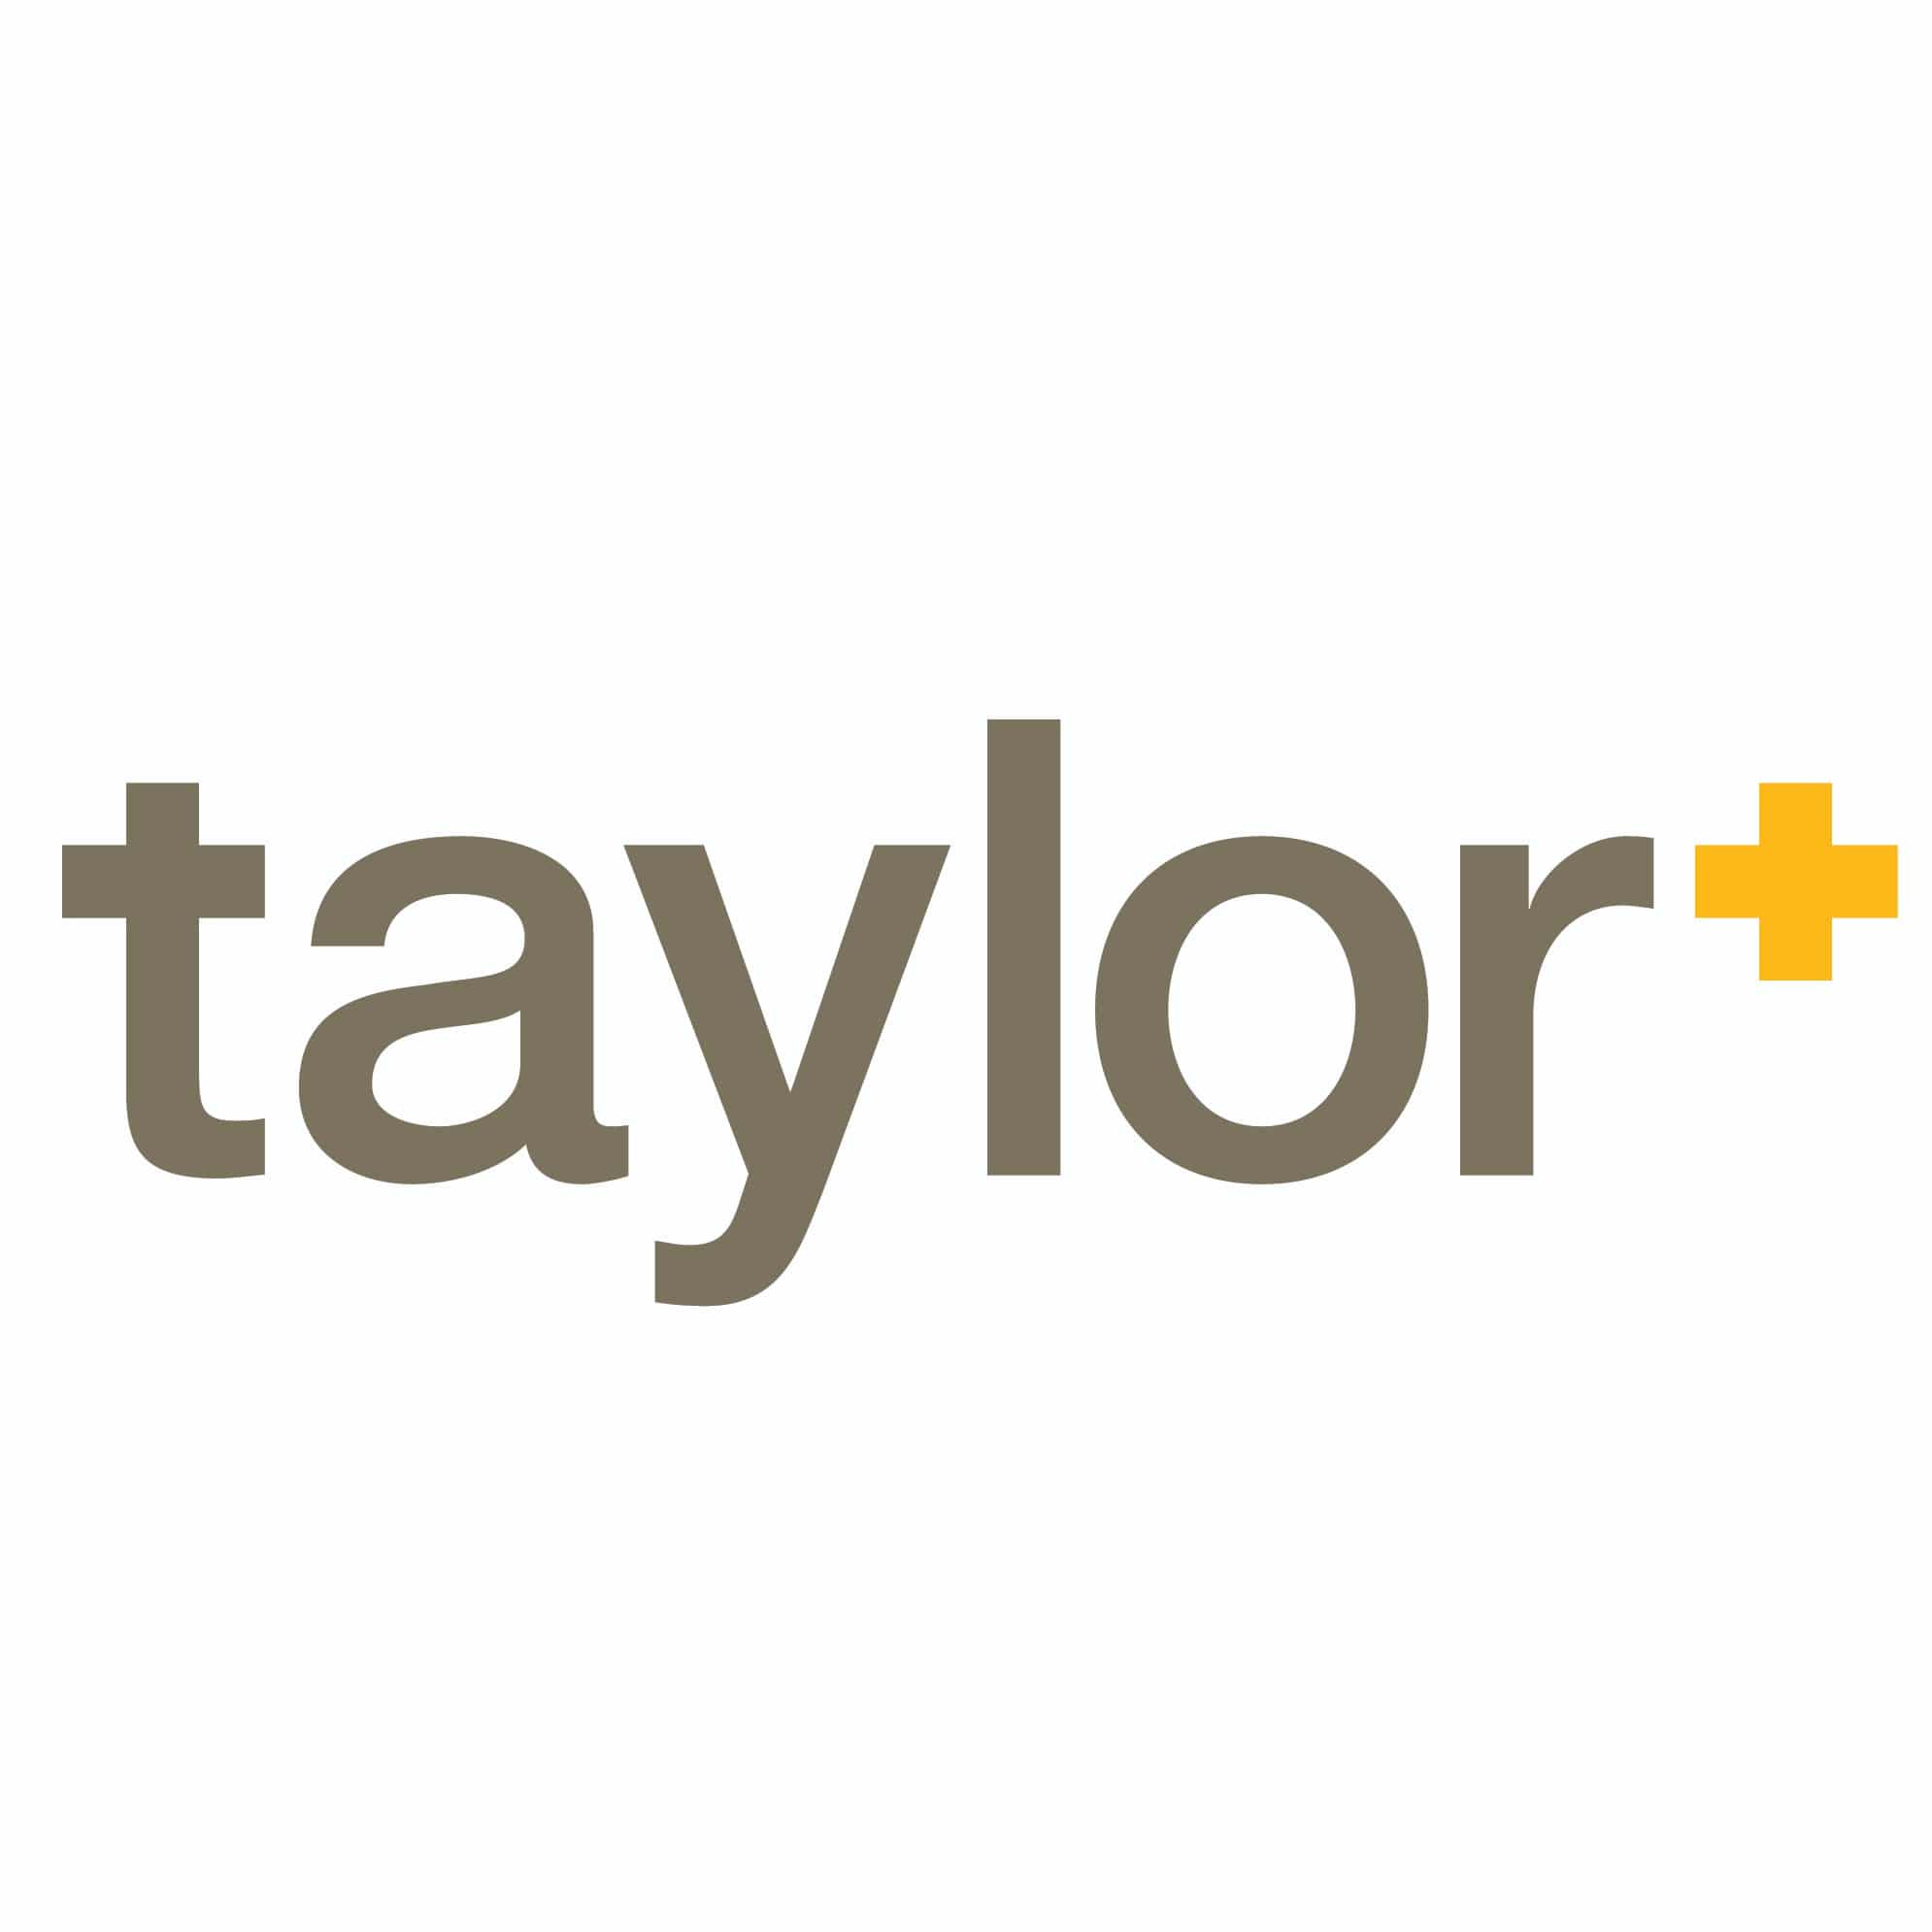 Taylor & Co. logo